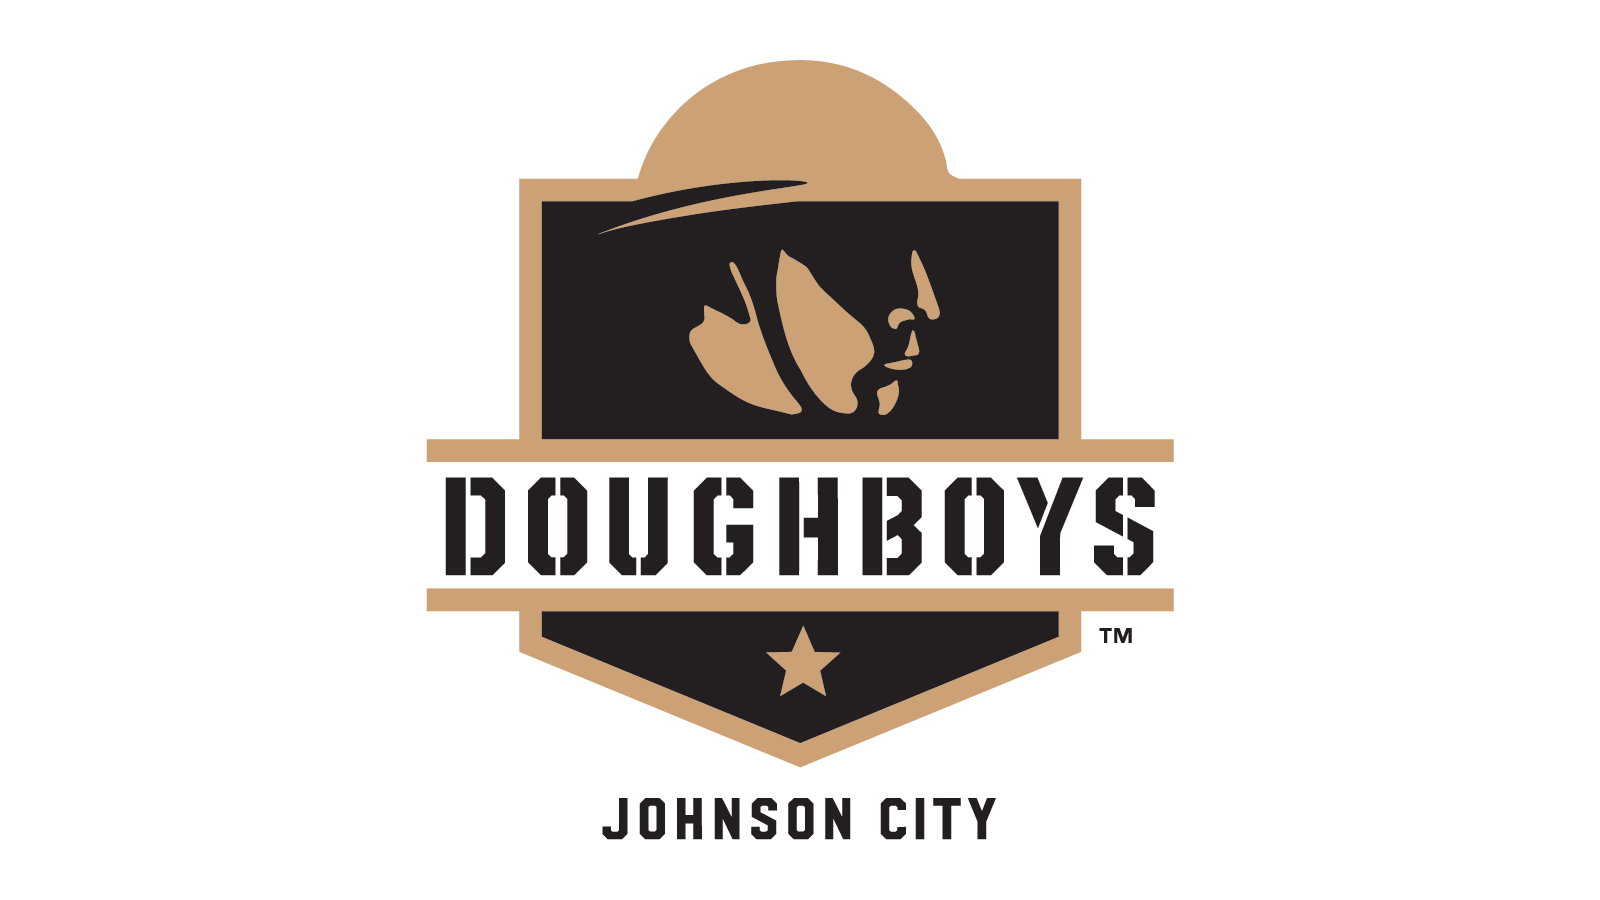 Johnson City Doughboys primary logo February 2, 2021 Photo on